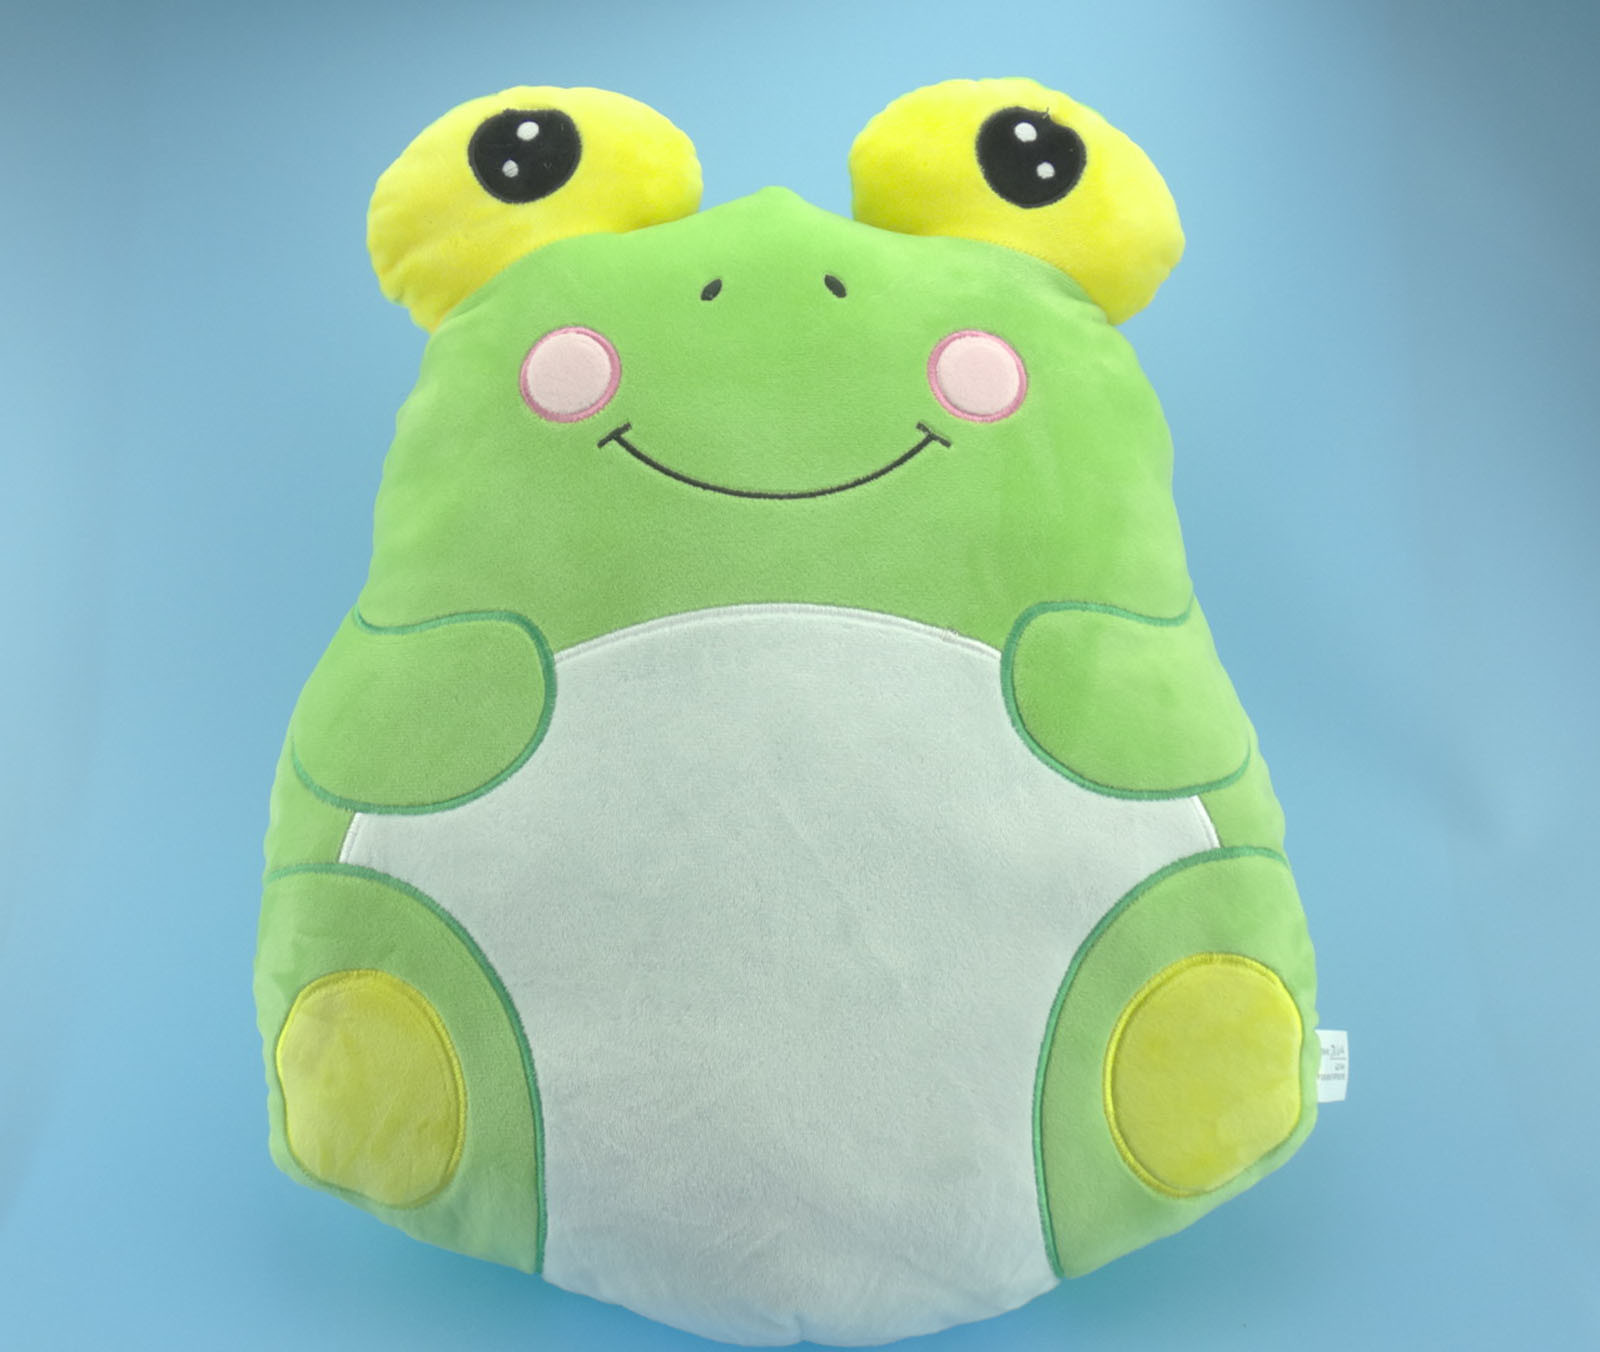 Soft Stuffed Plush Toy Frog Cushion